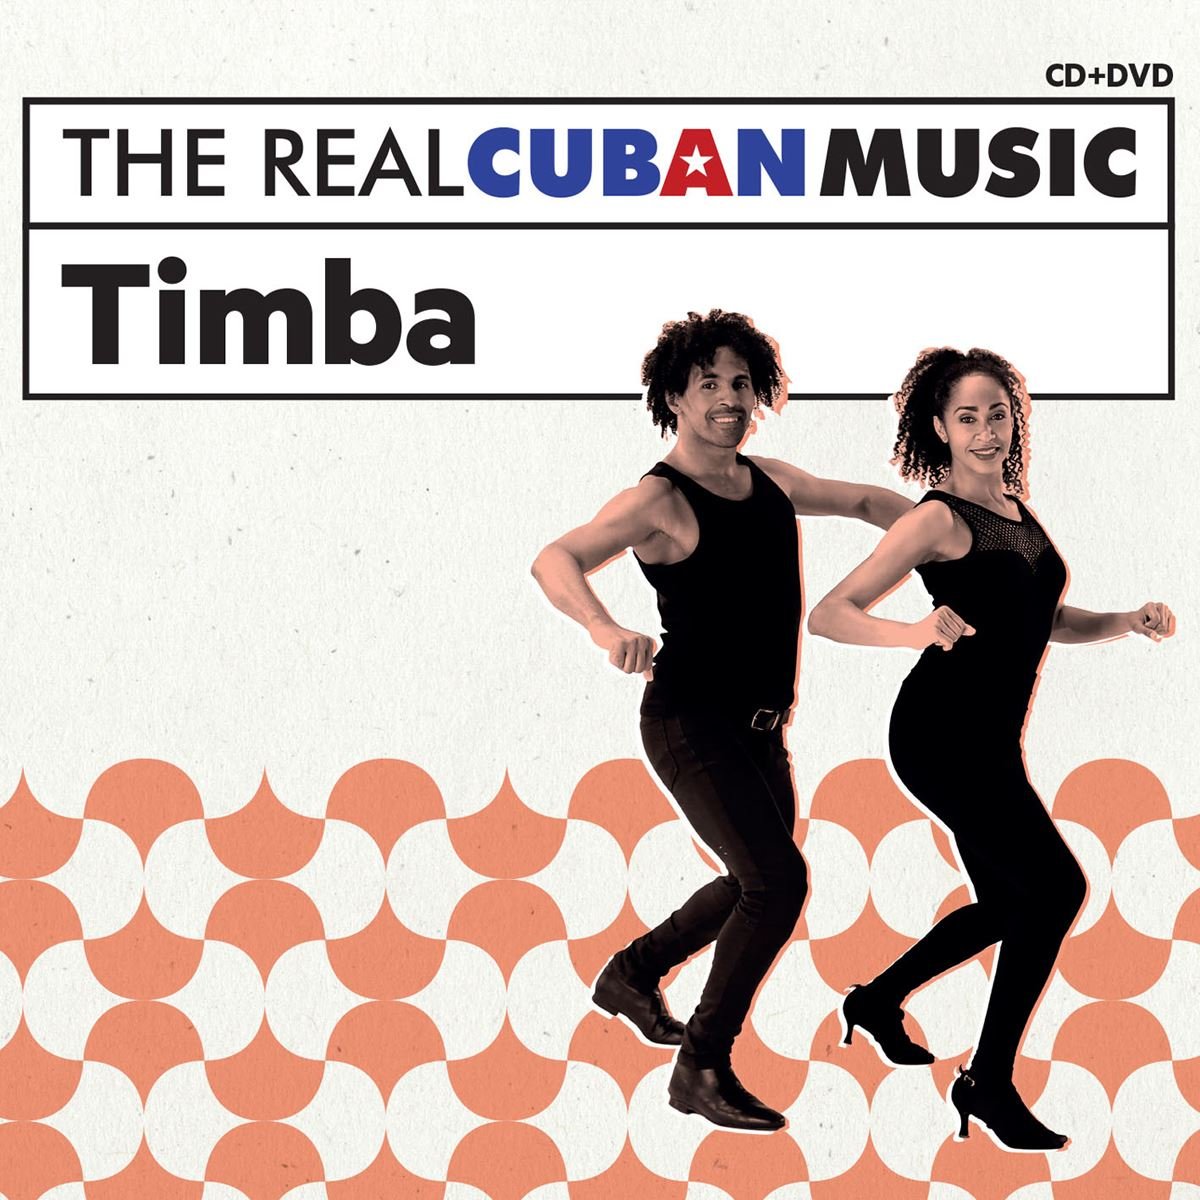 The Real Cuban Music: Timba (Remasterizado) Ntsc Version